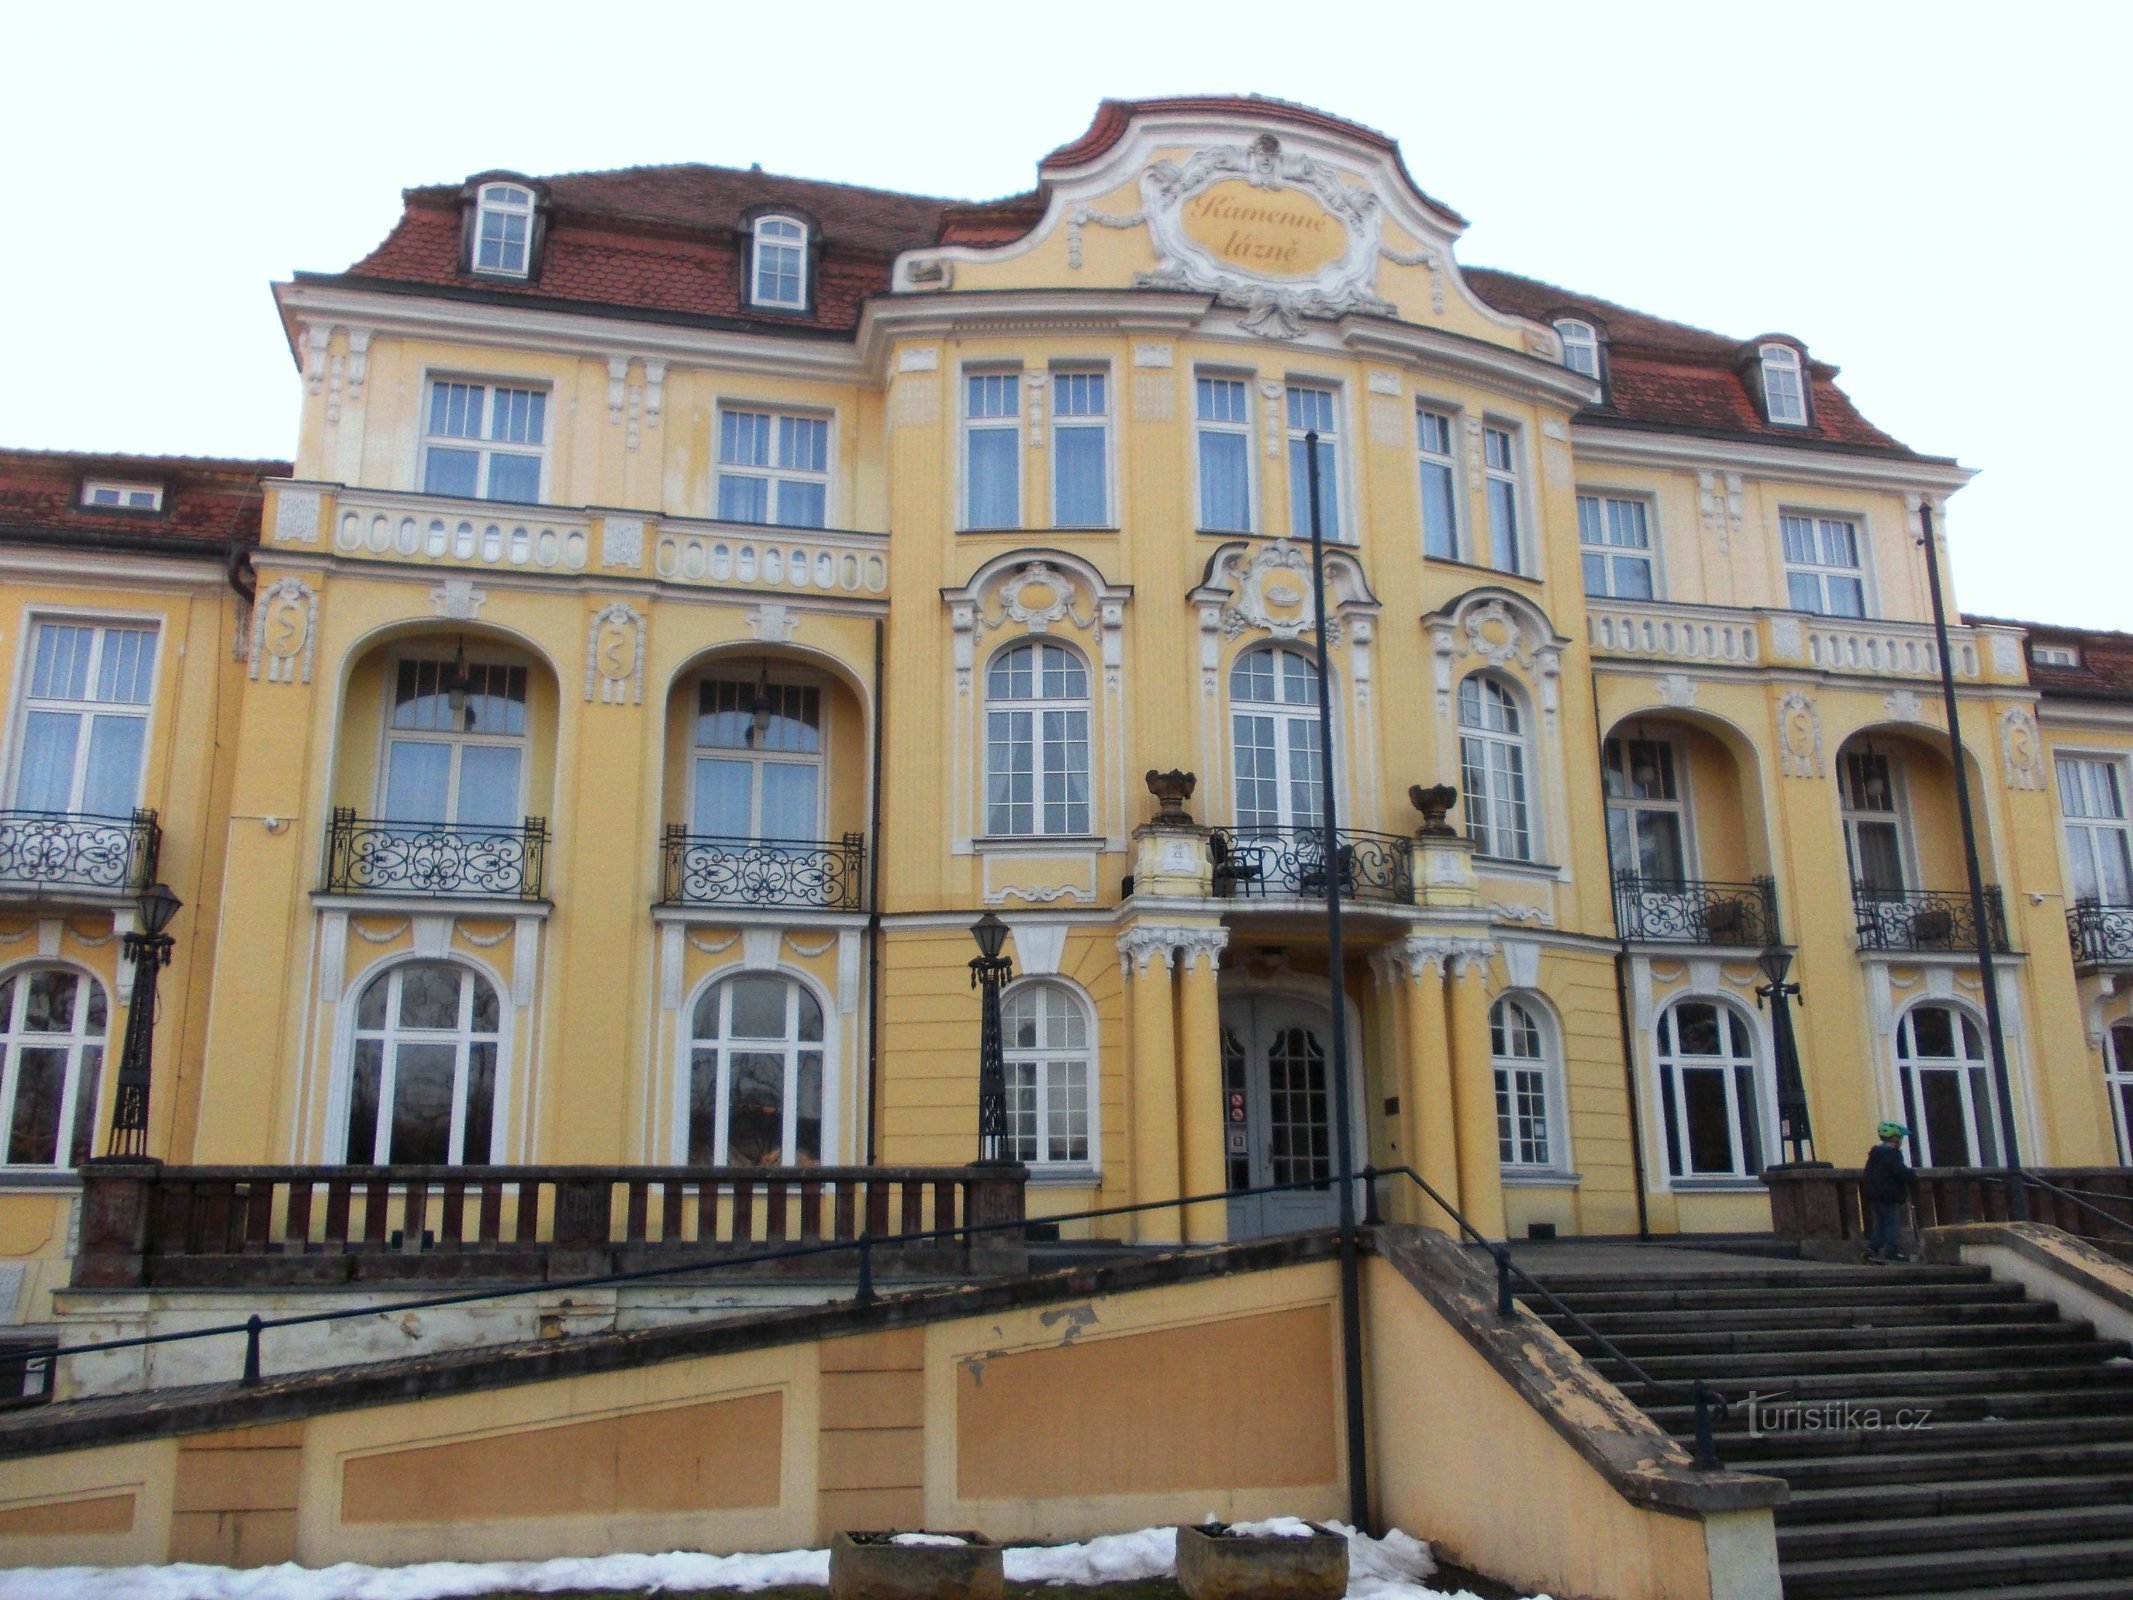 le bâtiment Kamenna lažná